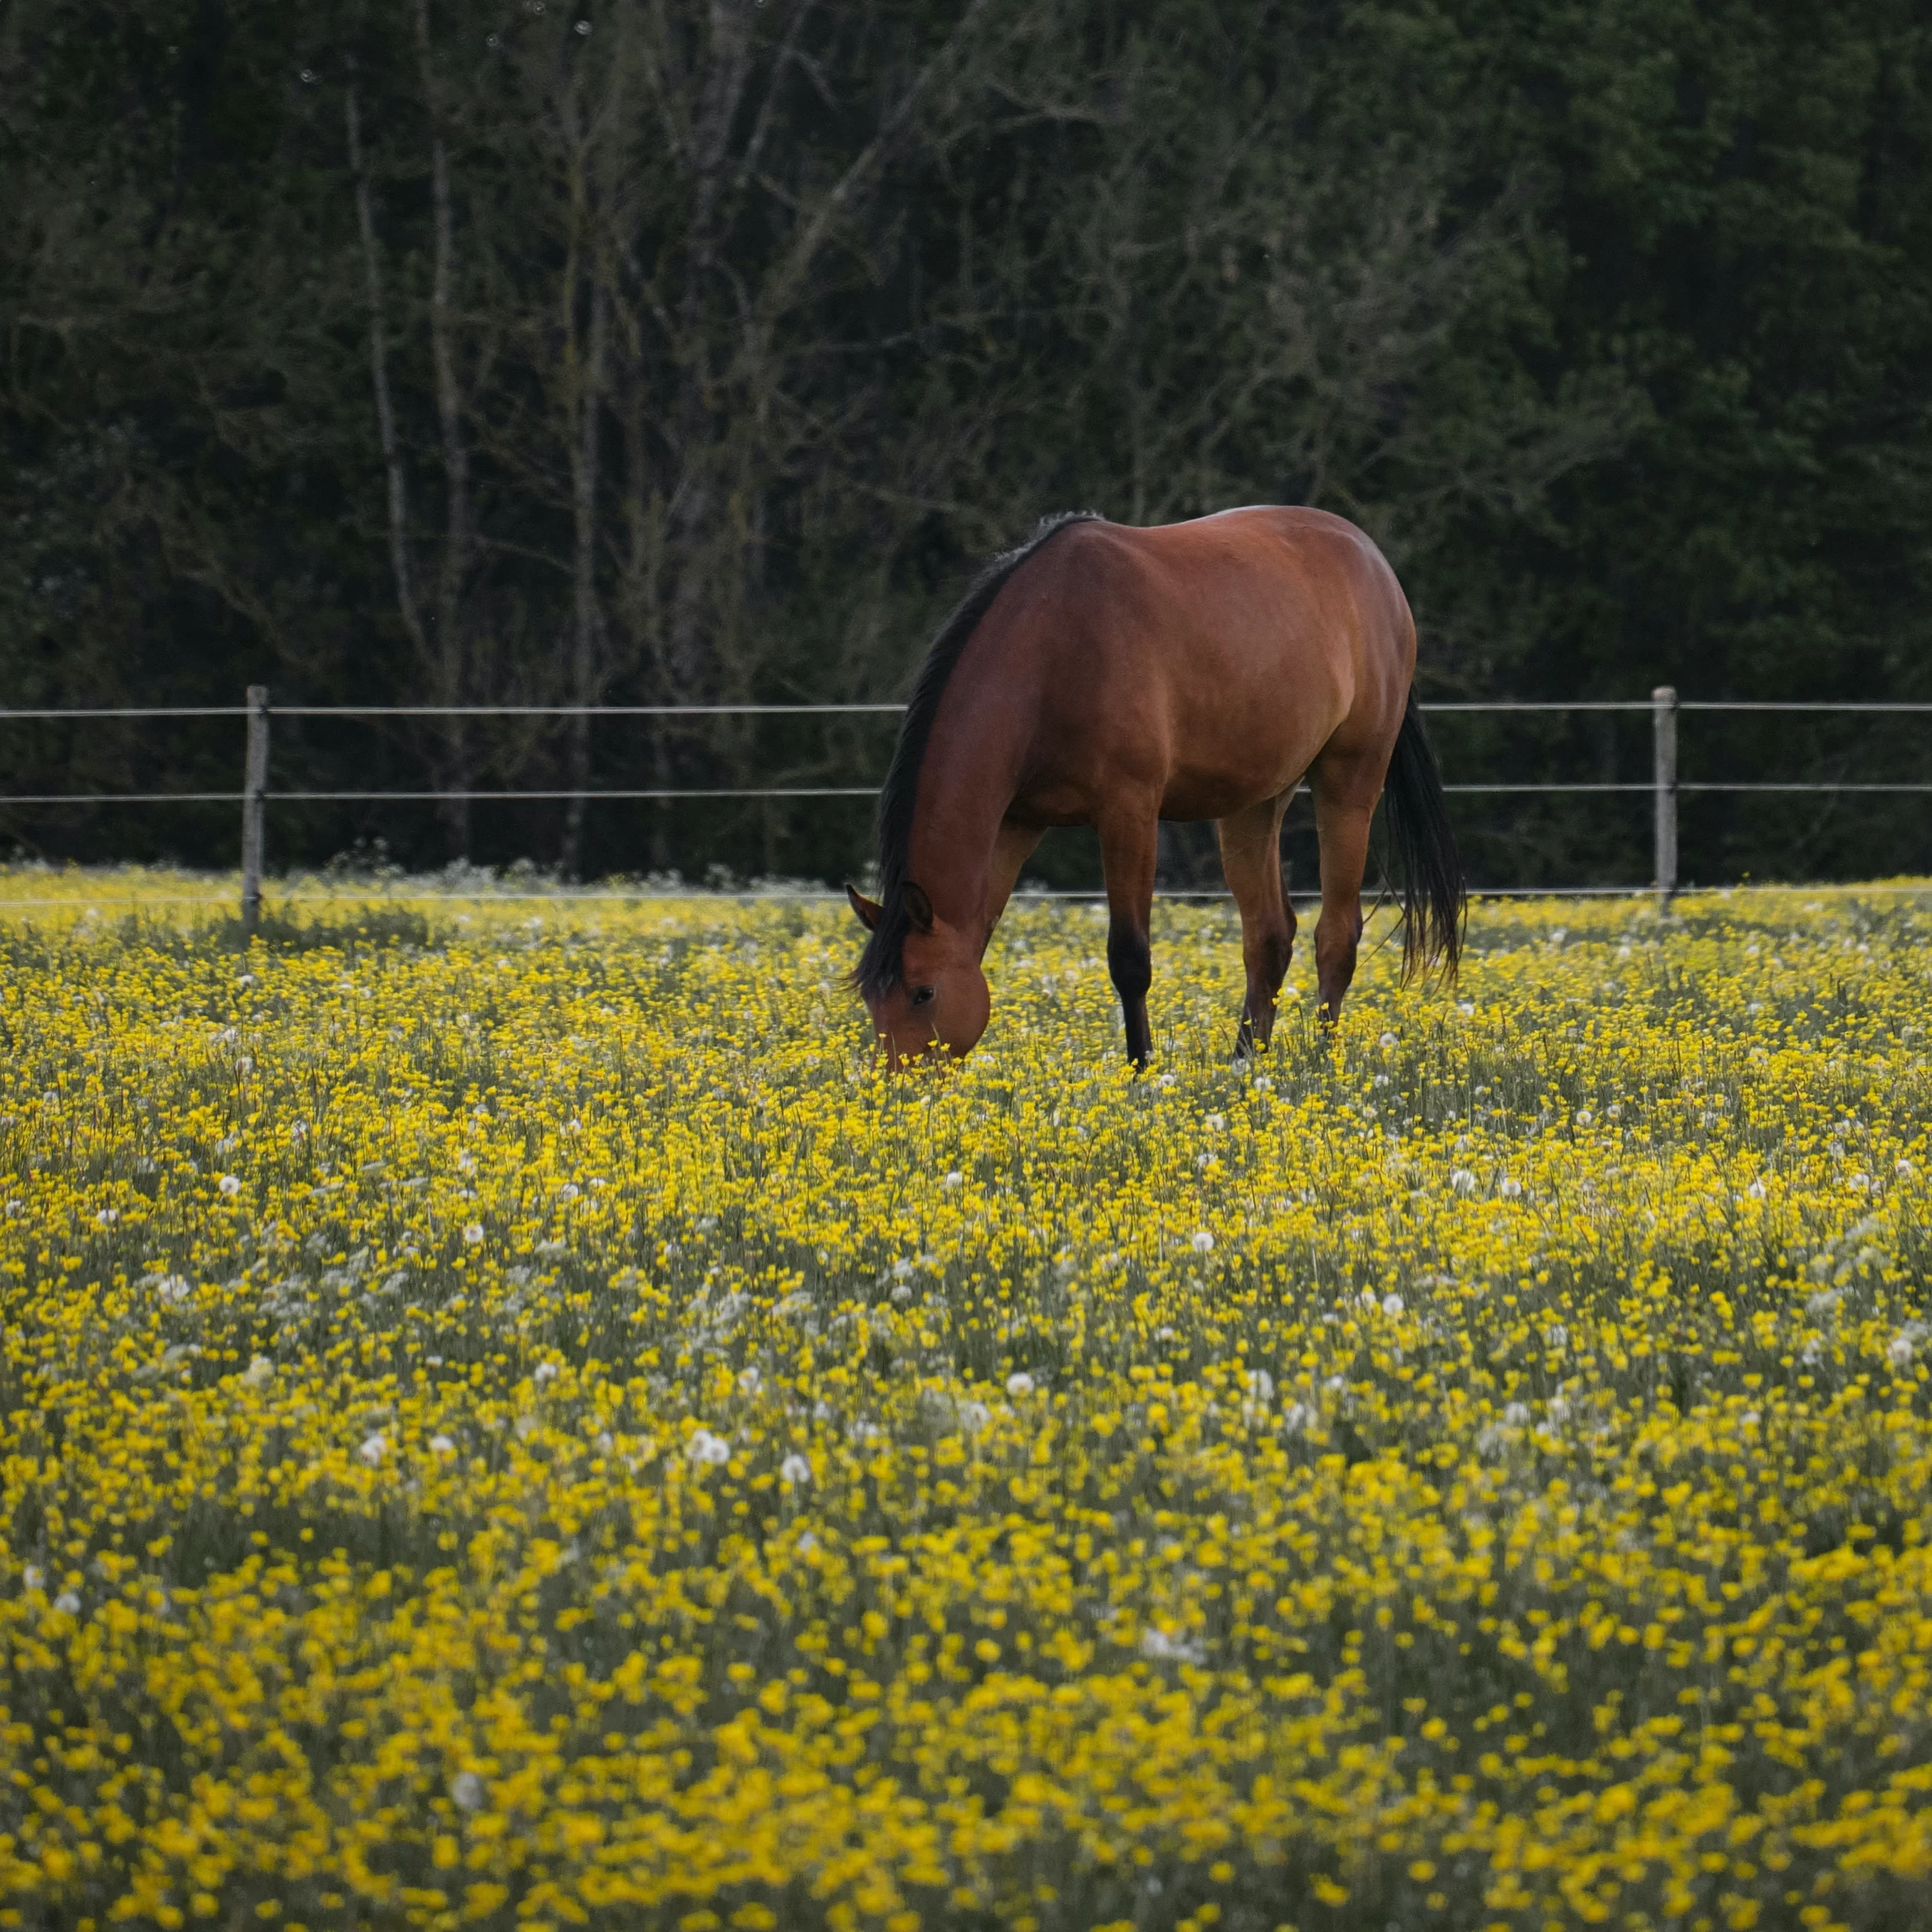 tim-schmidbauer-Mare Grazing in field of yellow flower groundcover-unsplash